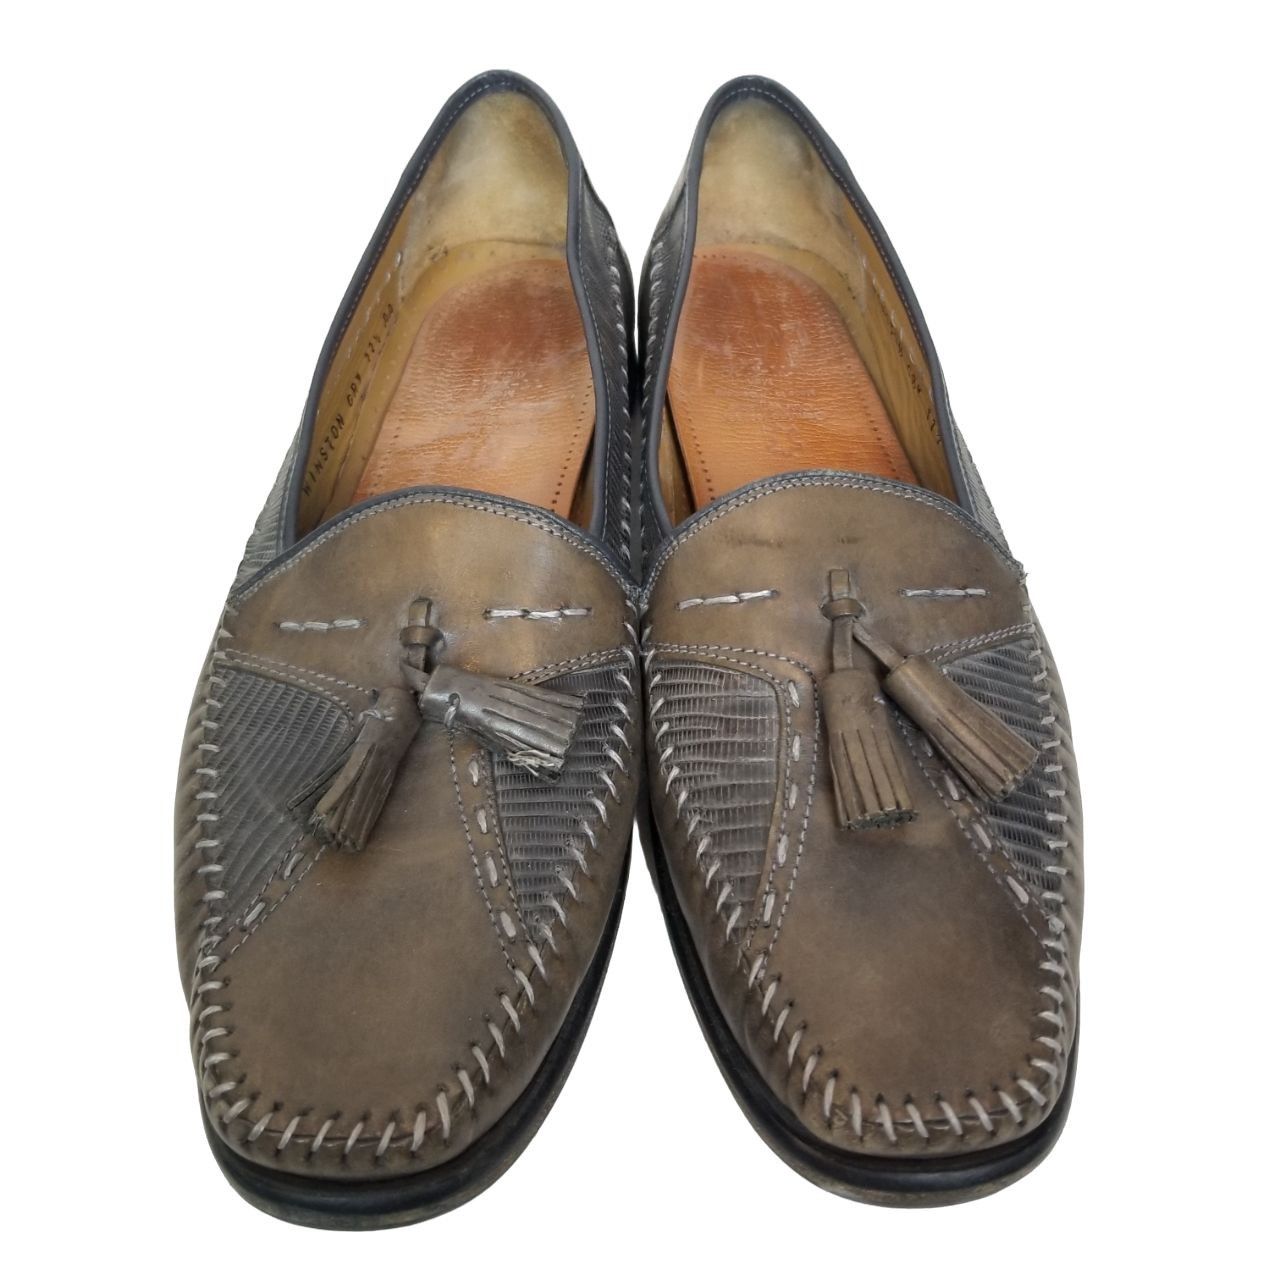 Sandro Moscoloni Sandro Moscoloni 11.5AA Leather Slip On Tassel Loafers Size US 11.5 / EU 44-45 - 3 Thumbnail